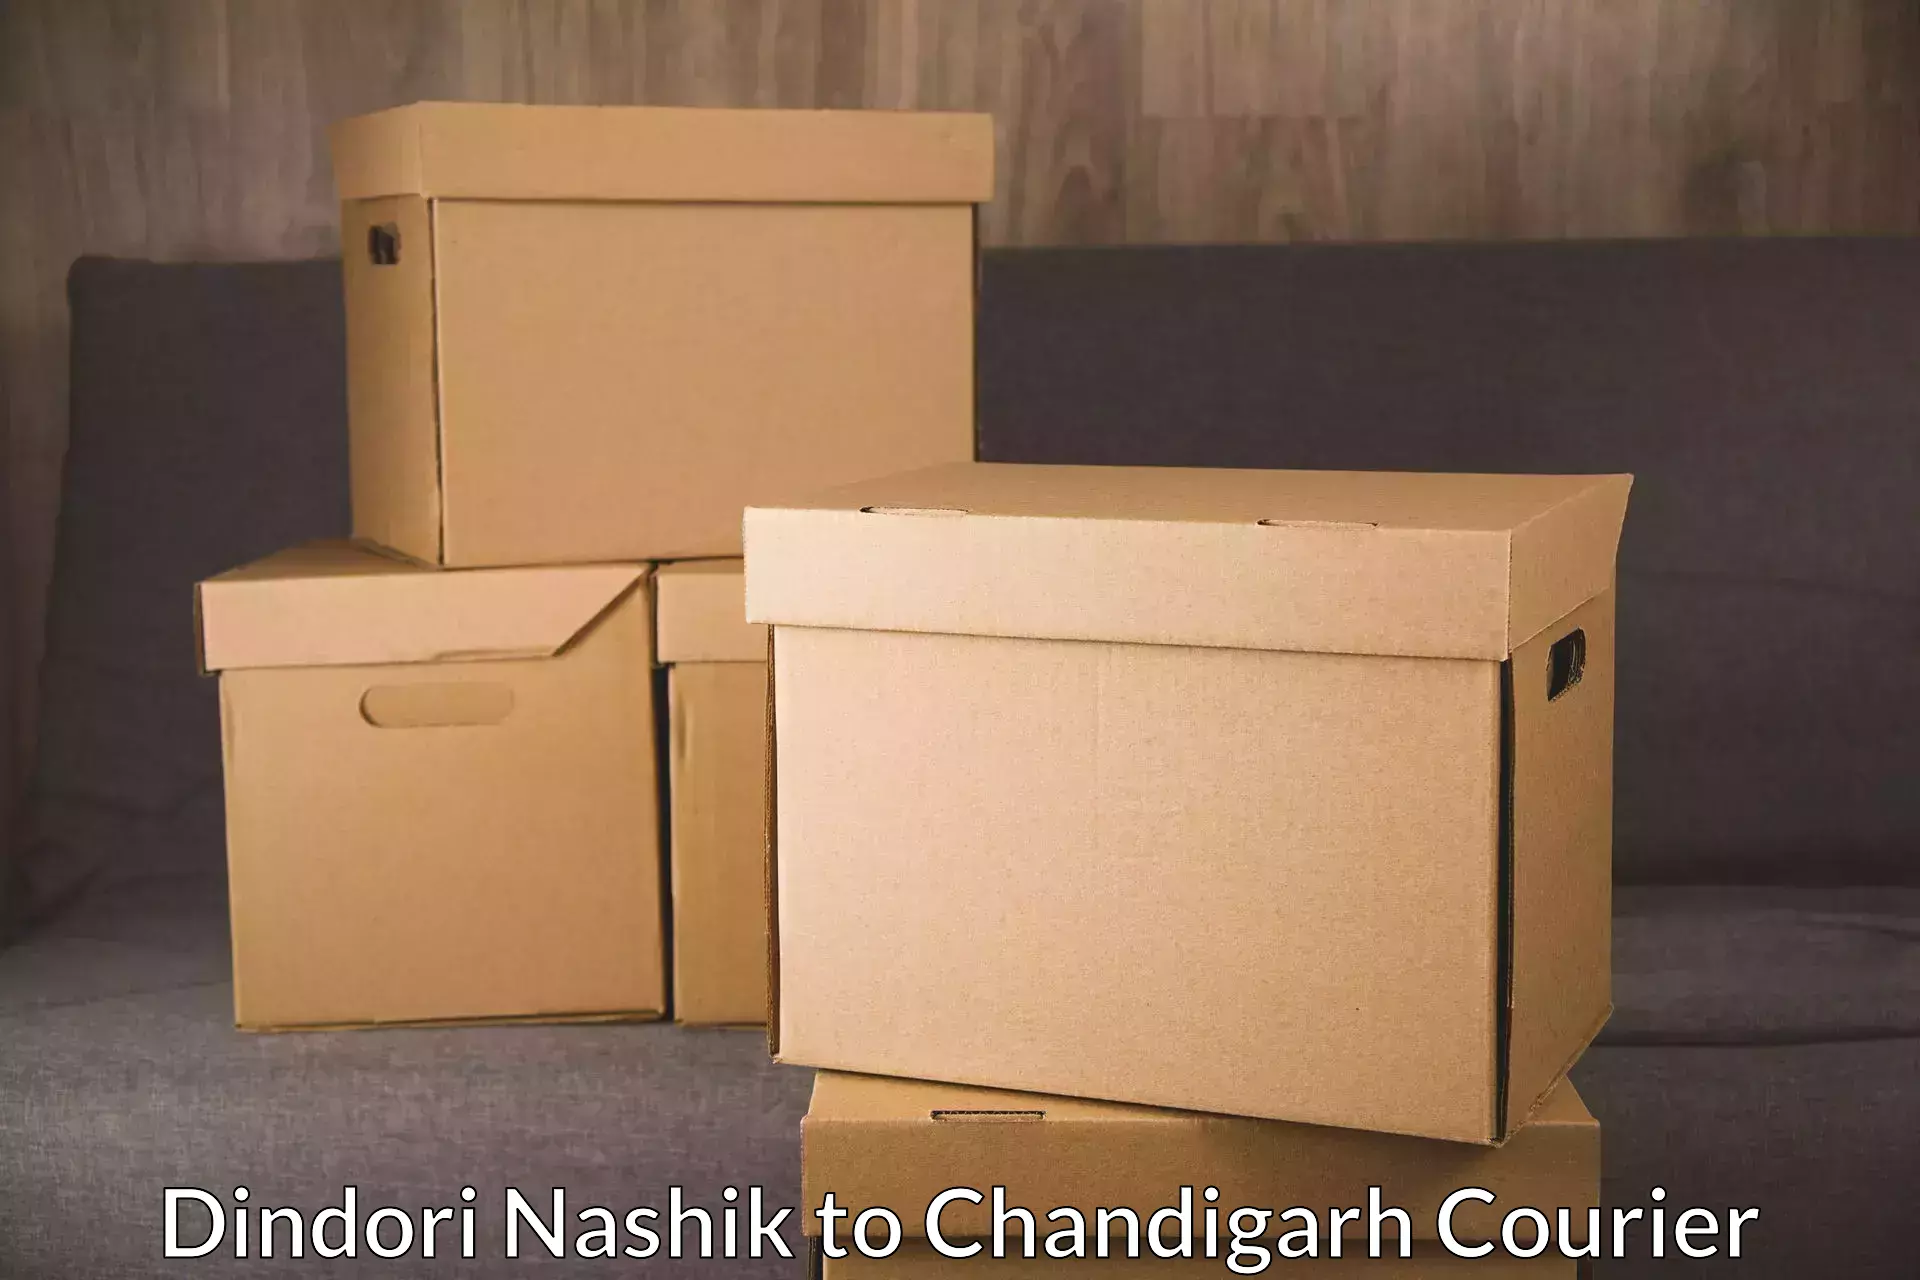 International parcel service Dindori Nashik to Chandigarh